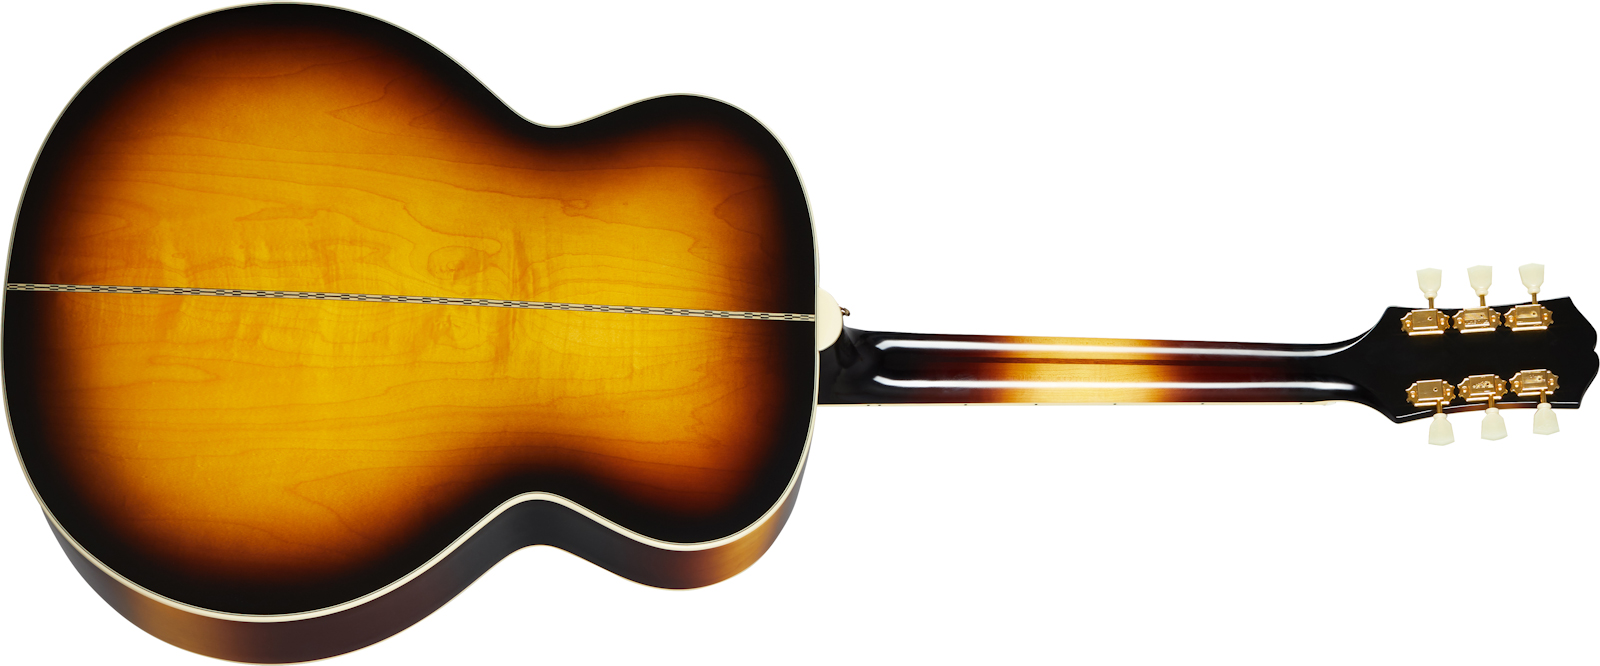 Epiphone J-200 Inspired By Gibson Jumbo Epicea Erable Lau - Aged Vintage Sunburst - Guitarra electro acustica - Variation 1